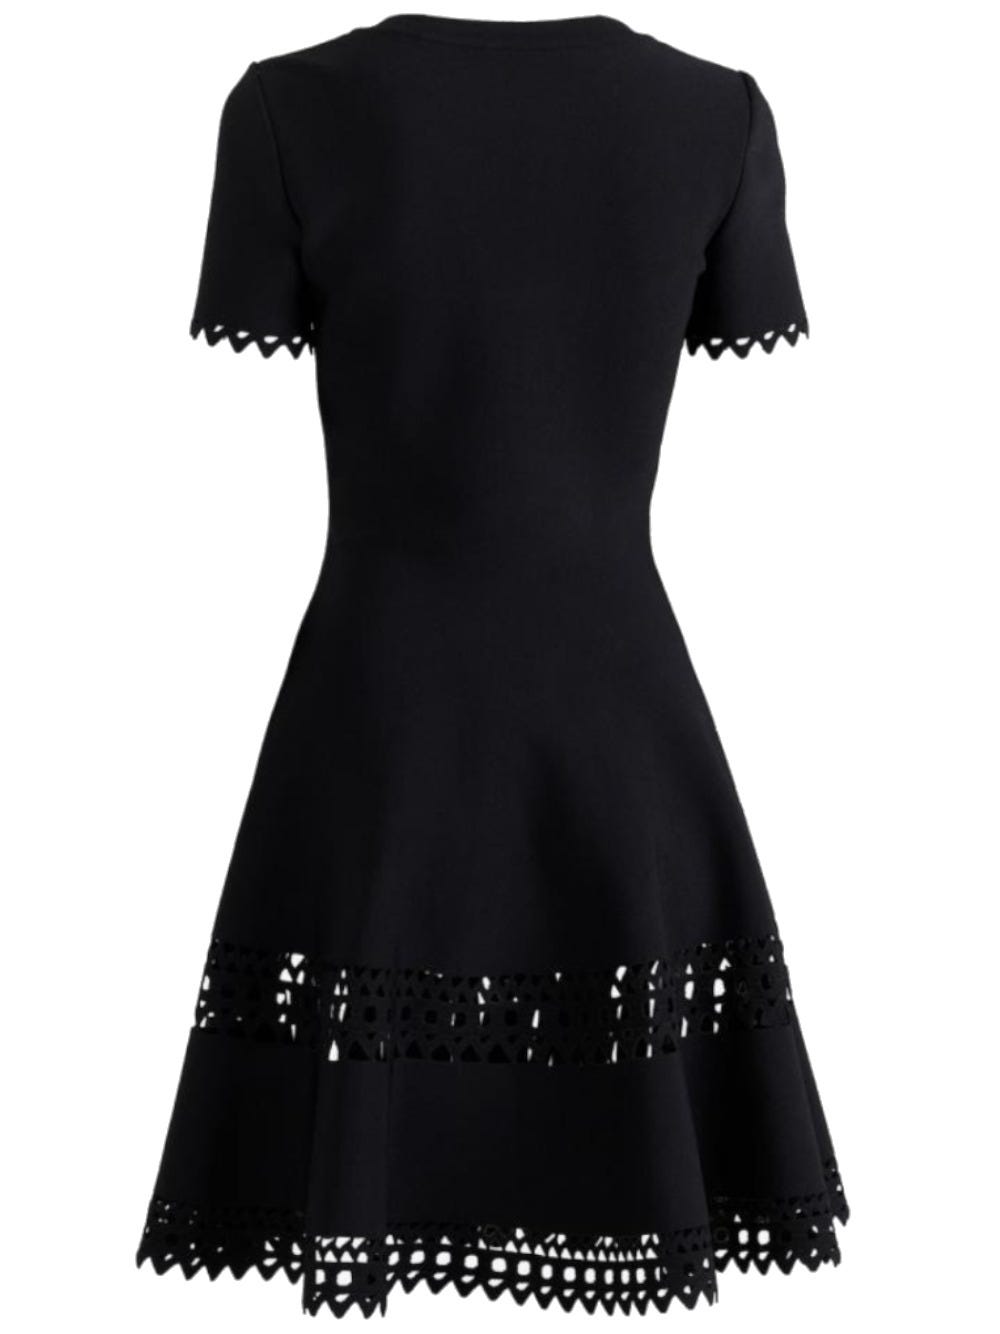 Black flared Dress in openwork stretch knit